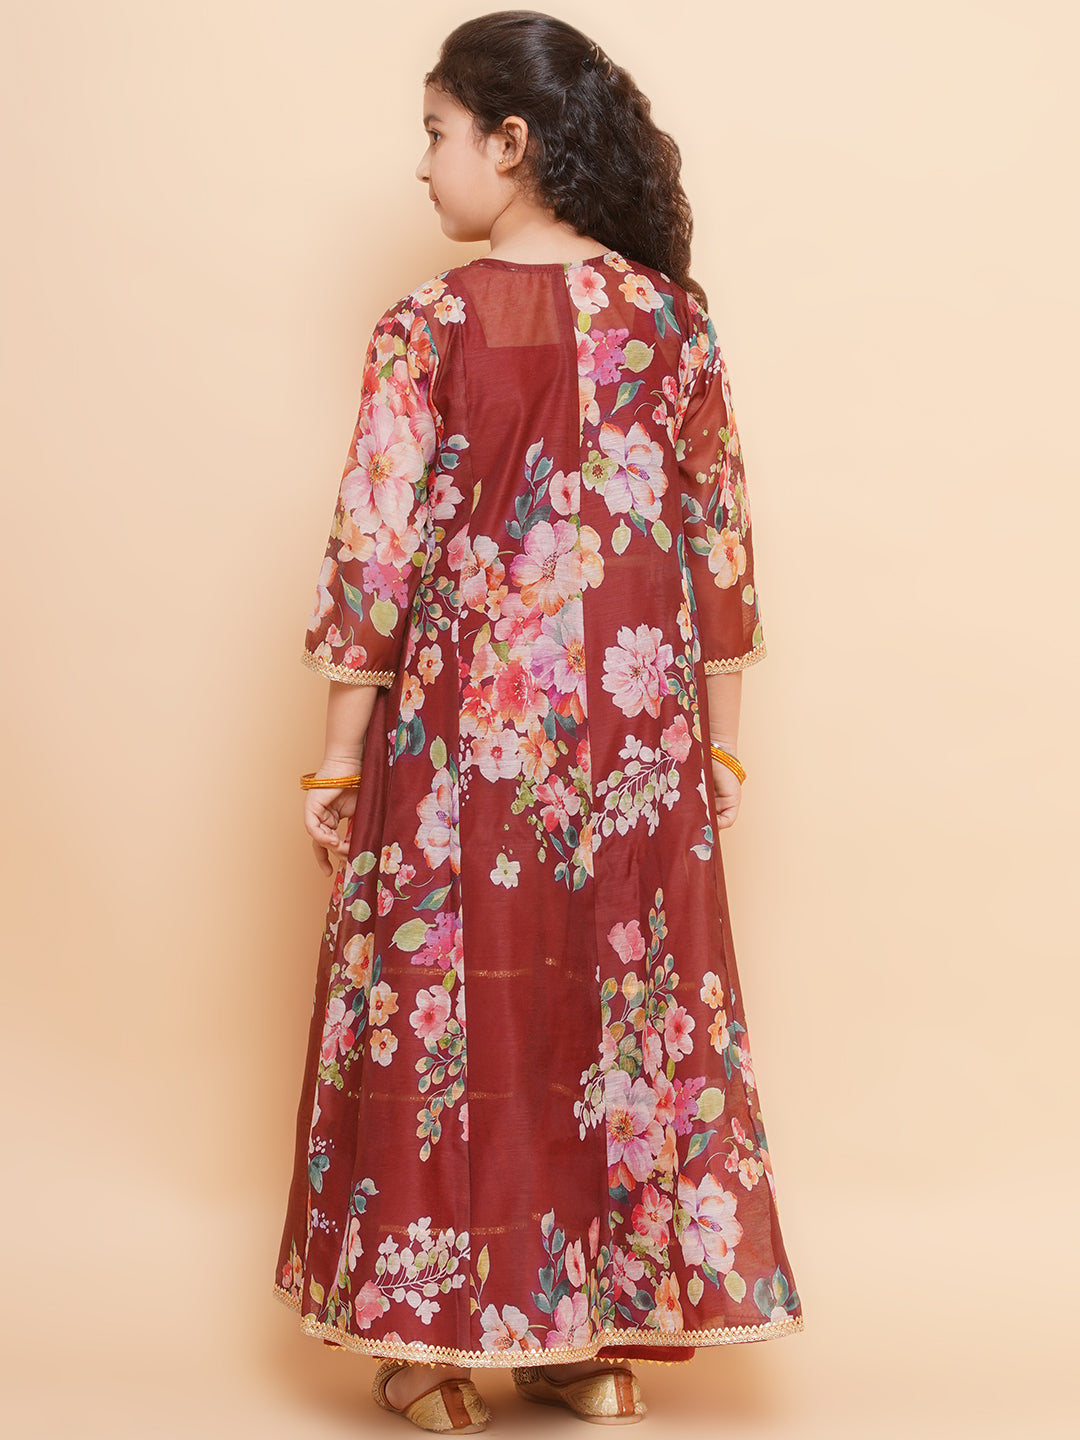 Girls Maroon Cami Saharara with Floral printed shrug